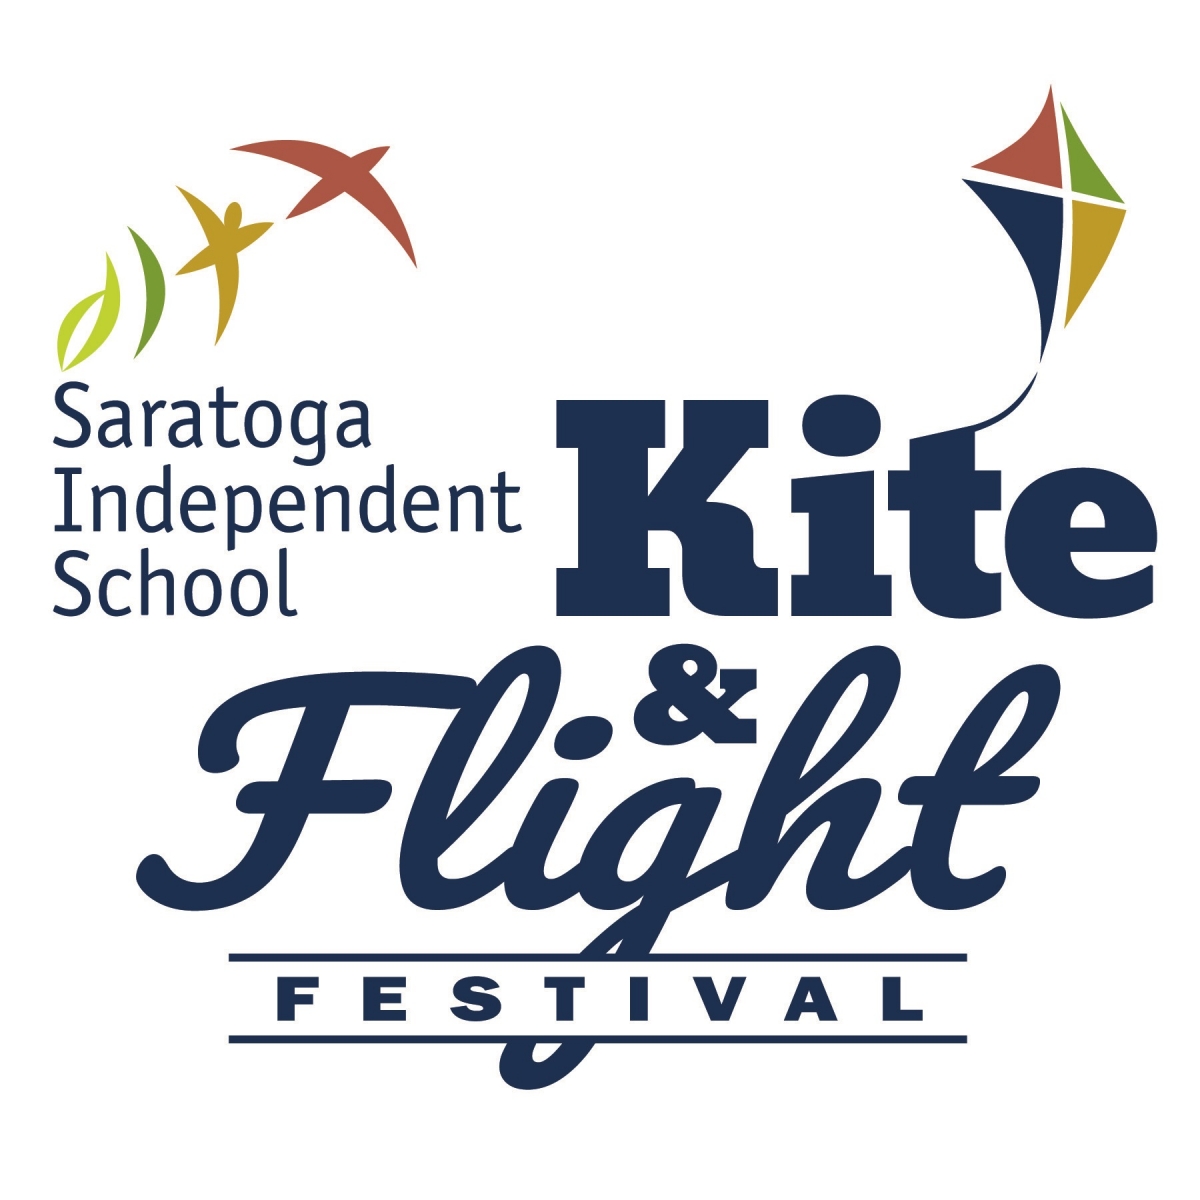 Saratoga Independent School Kite & Flight Festival